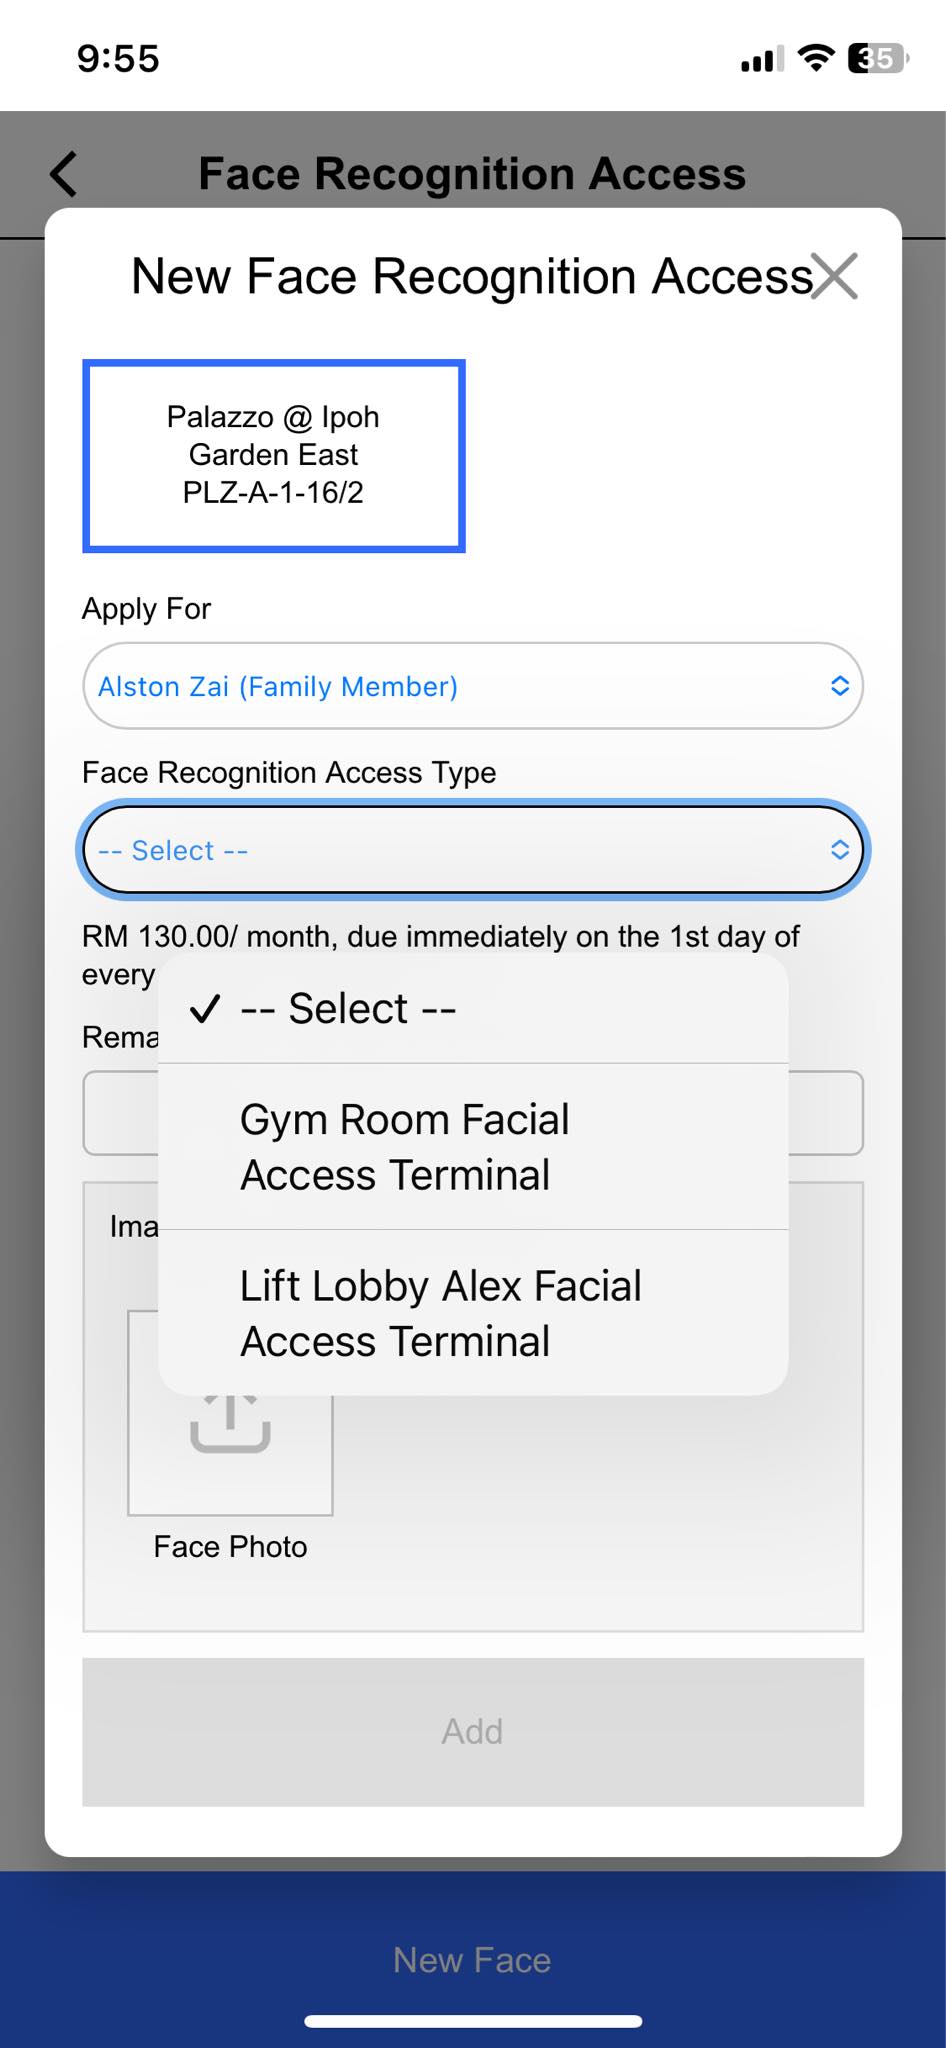 Face Recognition Access App Screenshot - Select Face Recognition Access Type